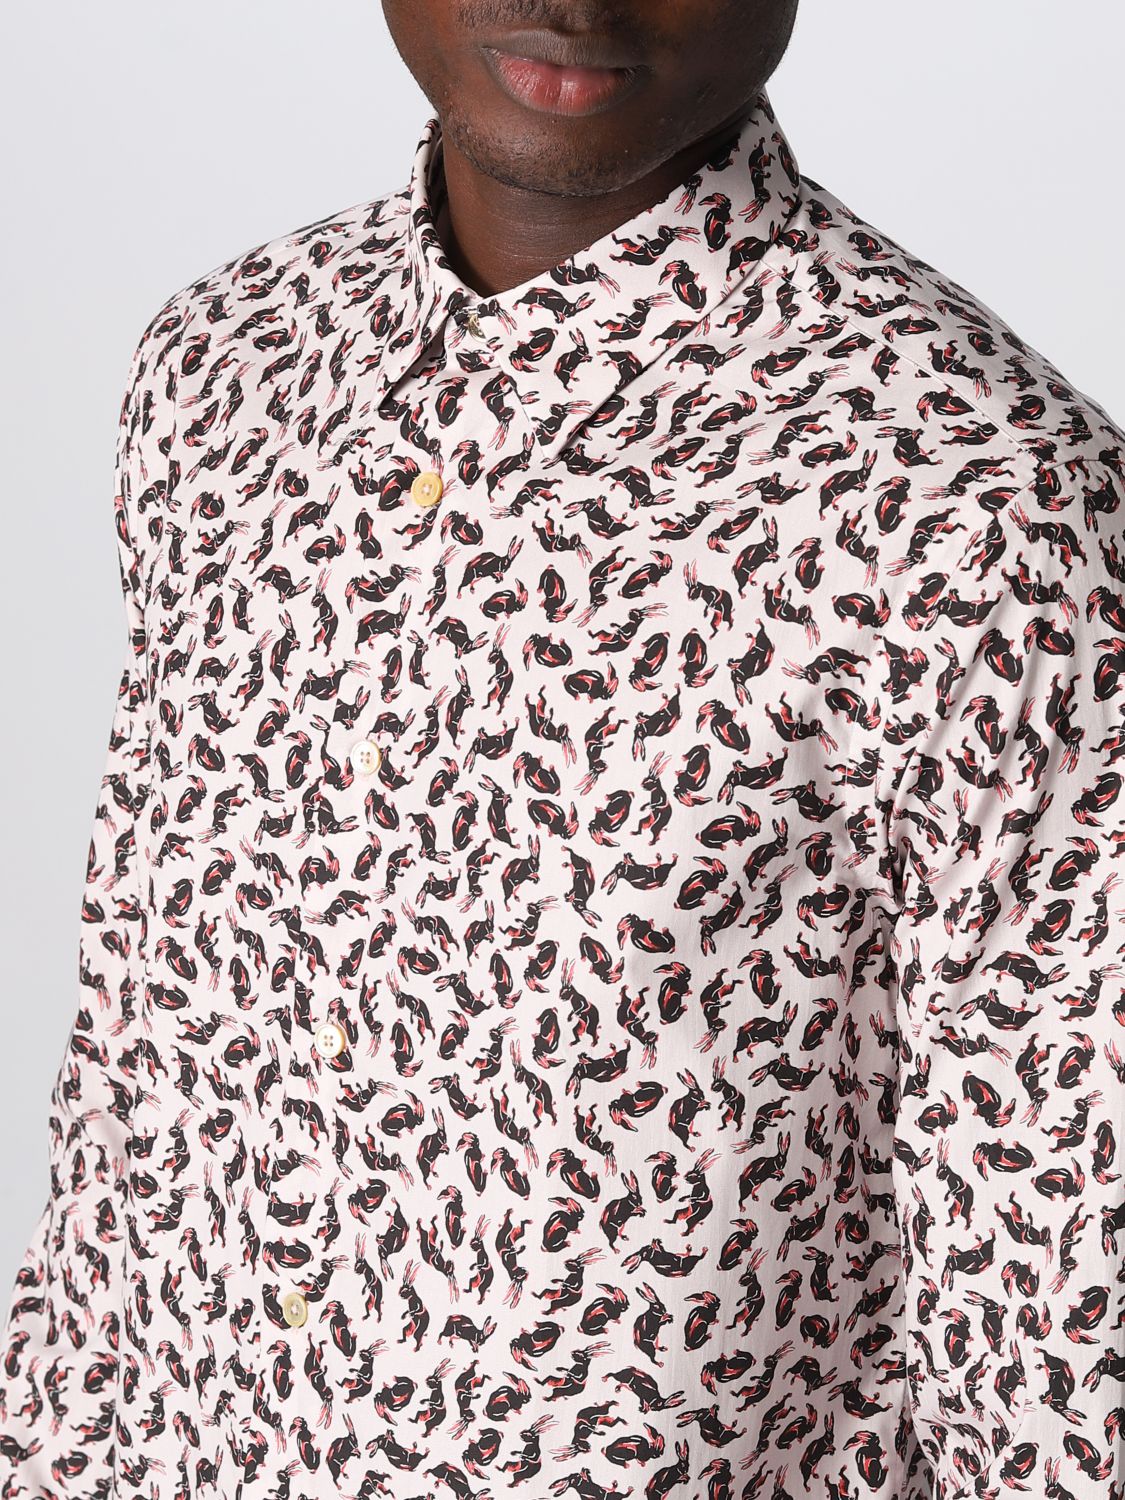 handboeien Arne Voorwaardelijk PAUL SMITH: shirt for man - Multicolor | Paul Smith shirt M1R006LJ01842  online on GIGLIO.COM